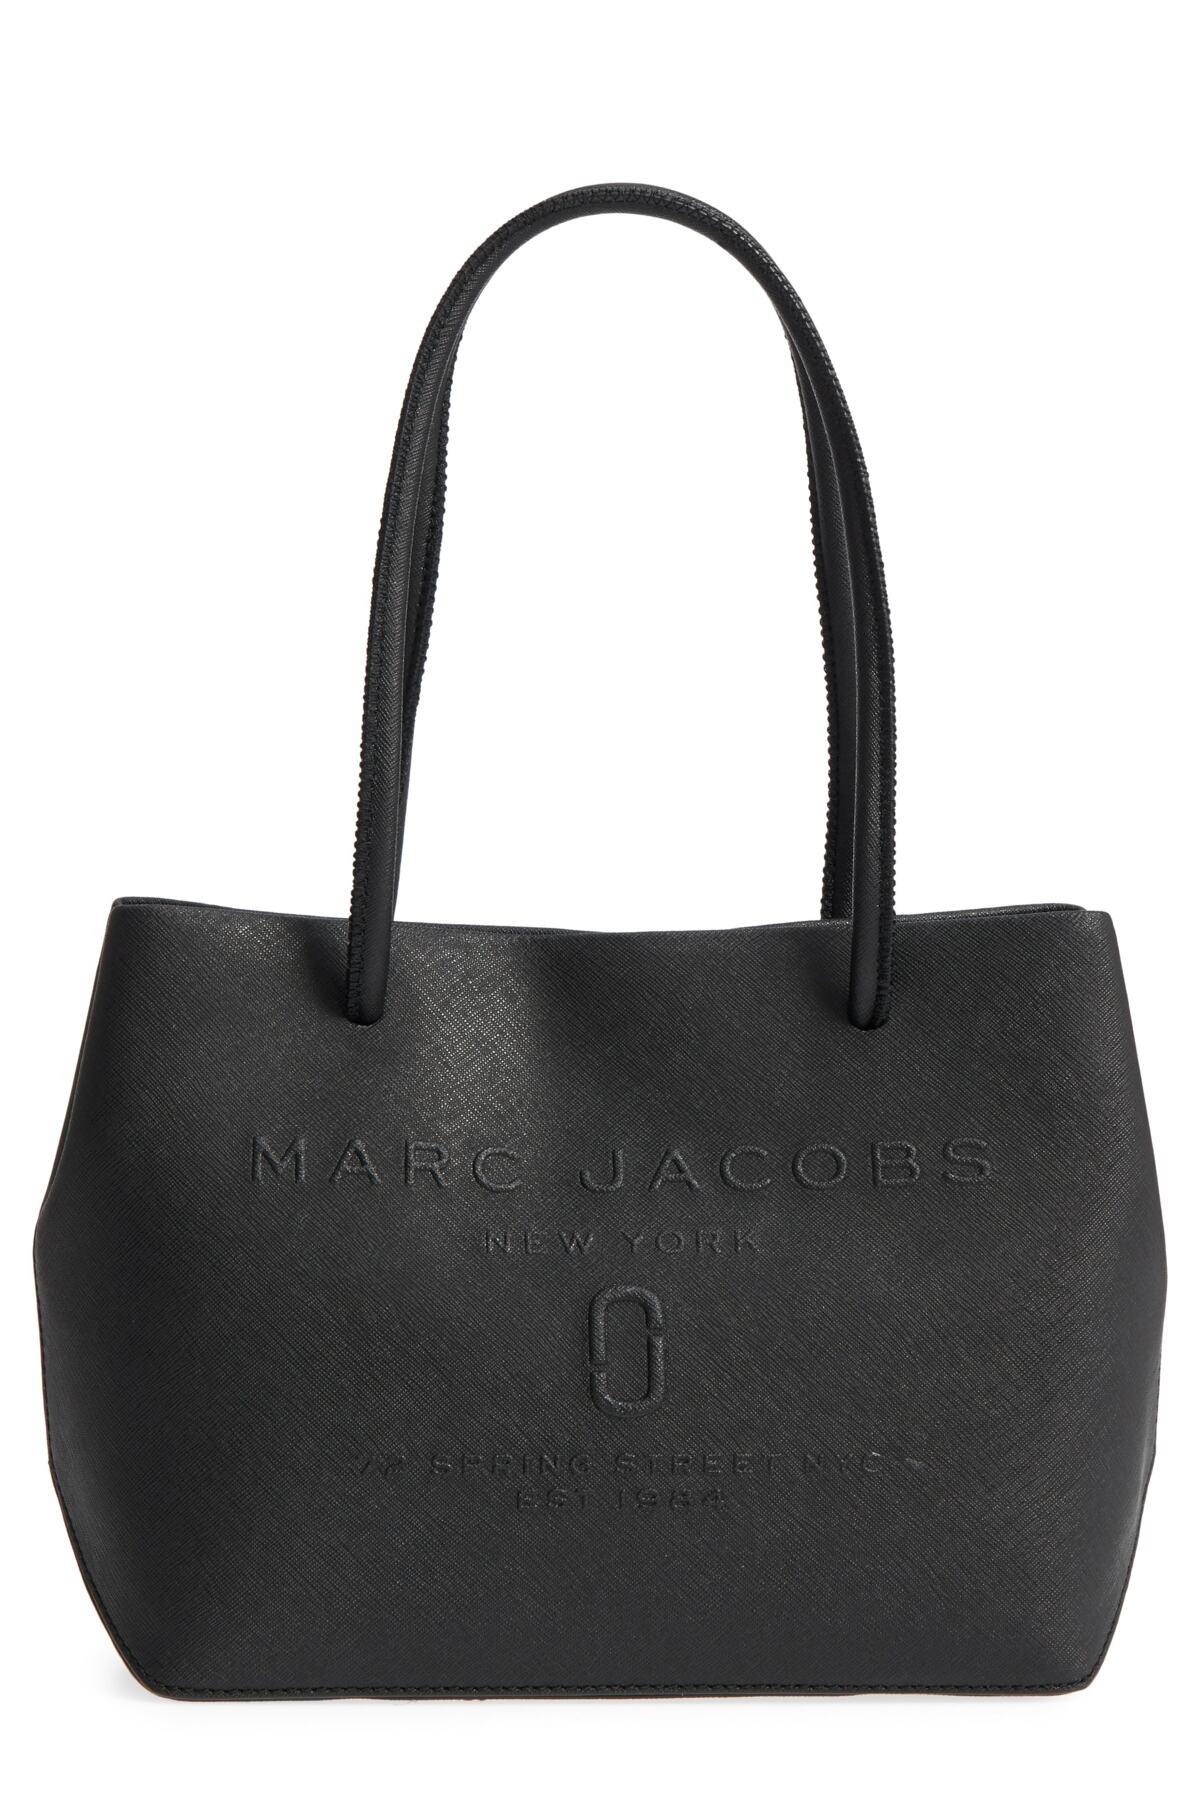 Marc Jacobs Mini Leather Logo Shopper Tote in Black | Lyst